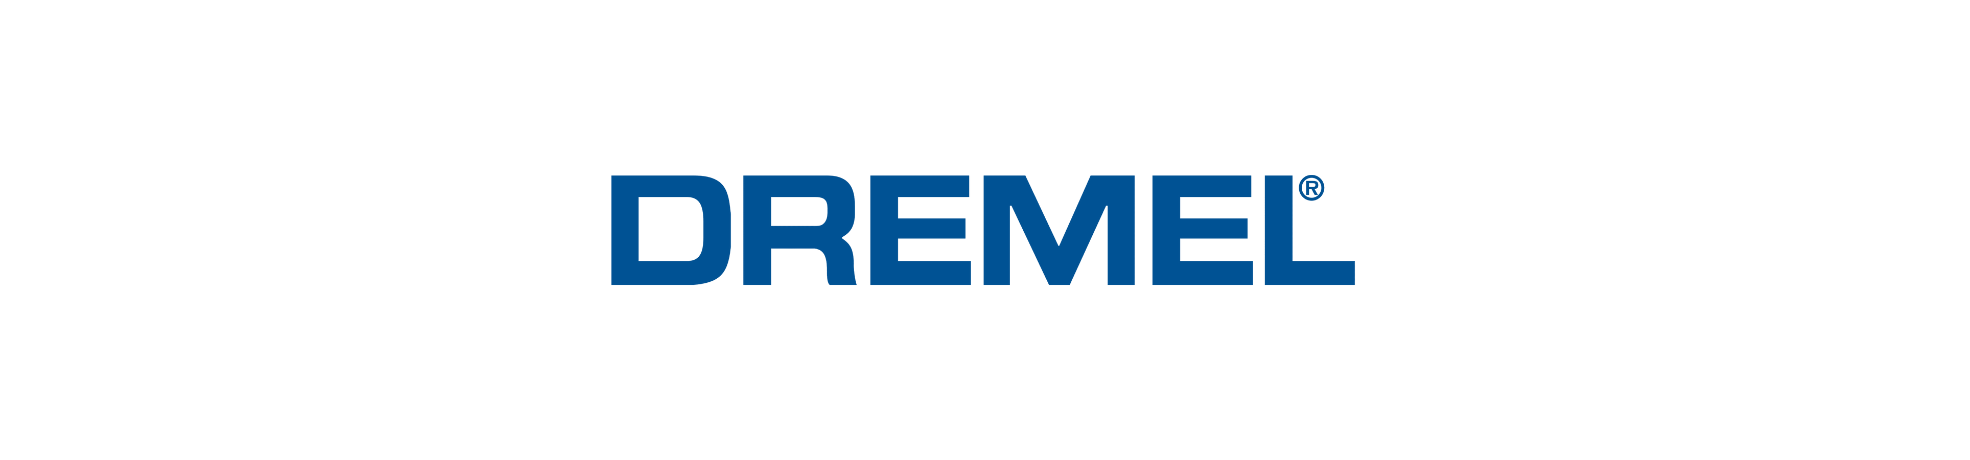 Dremel| advanced solutions for tools 